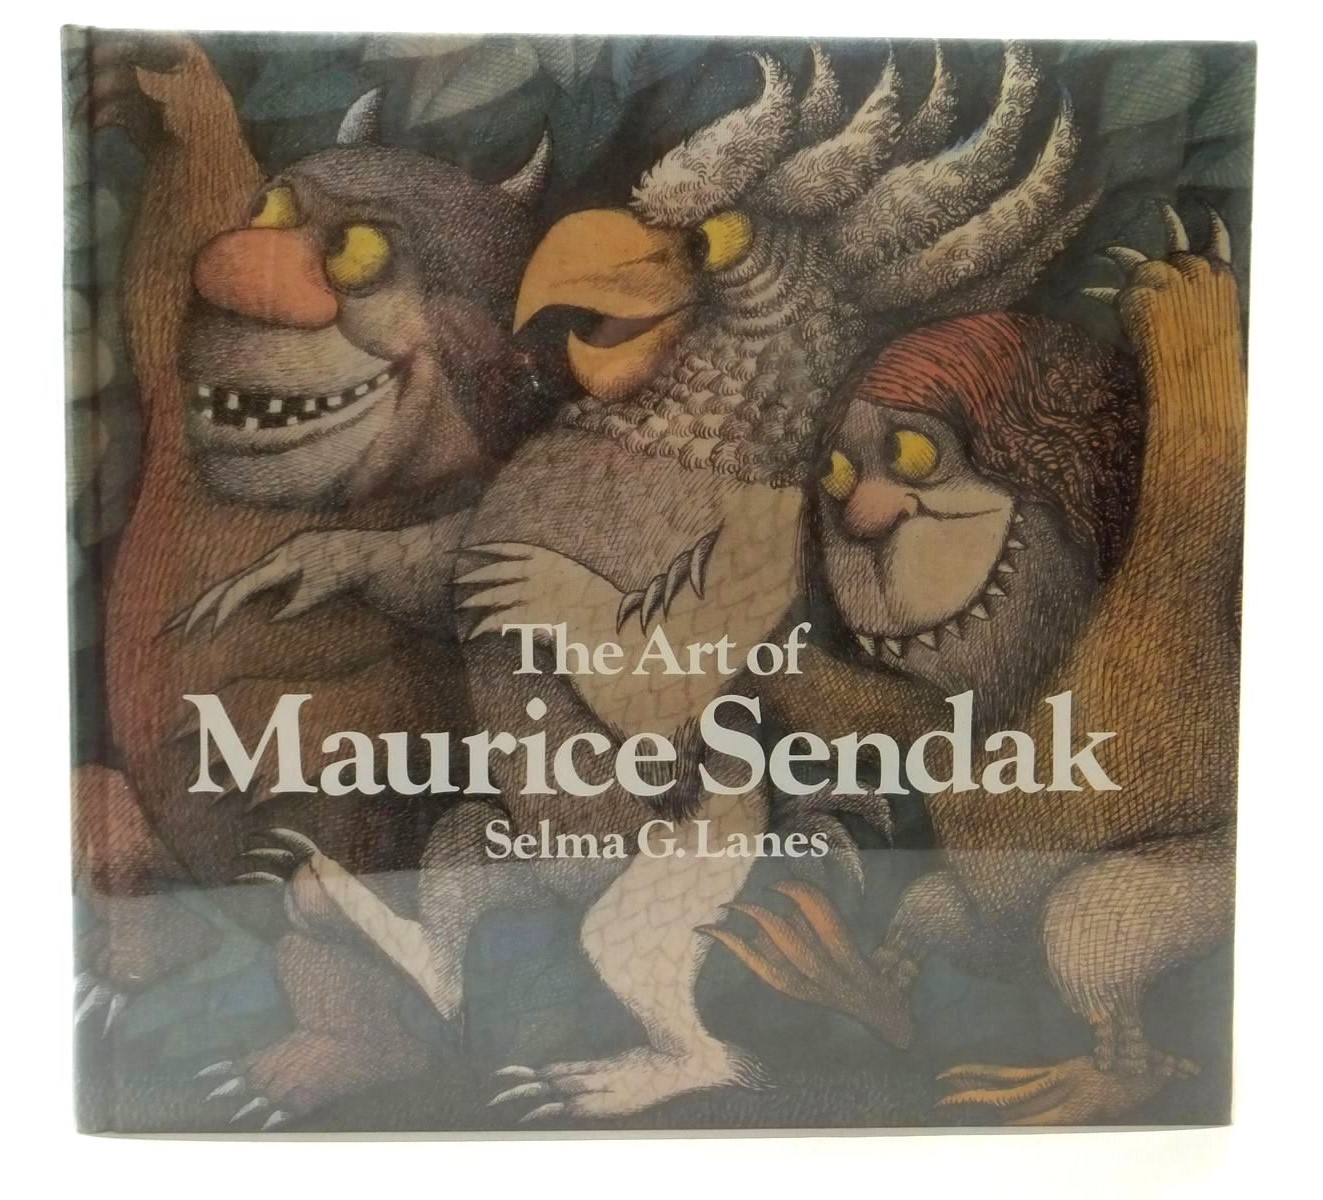 The Art of Maurice Sendak  By Selma G. Lanes